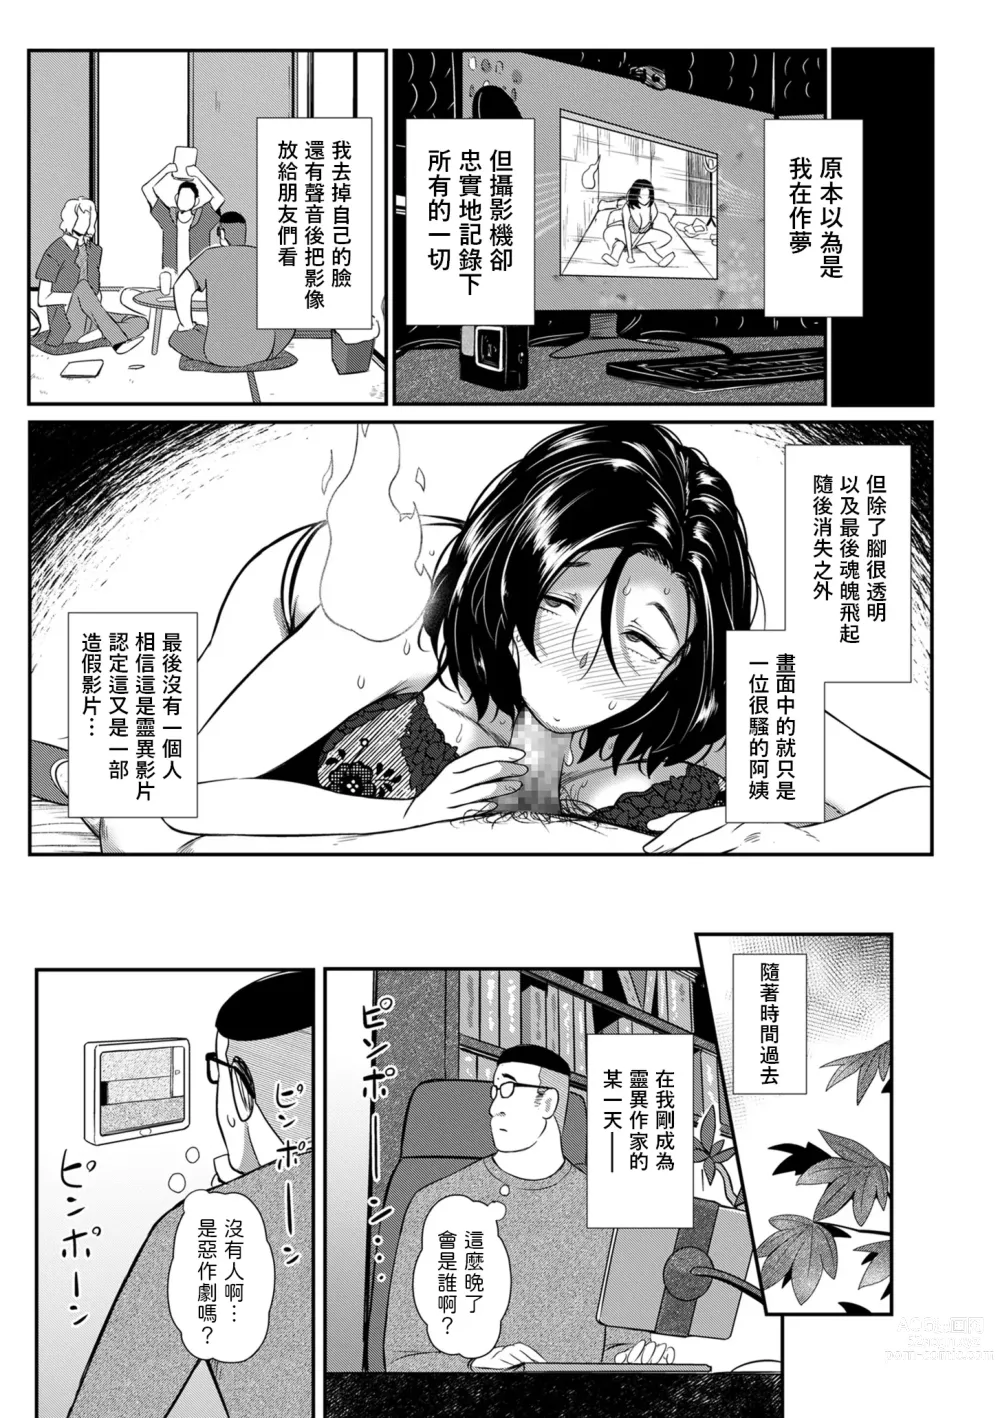 Page 25 of manga Noriko-san wa Maji!